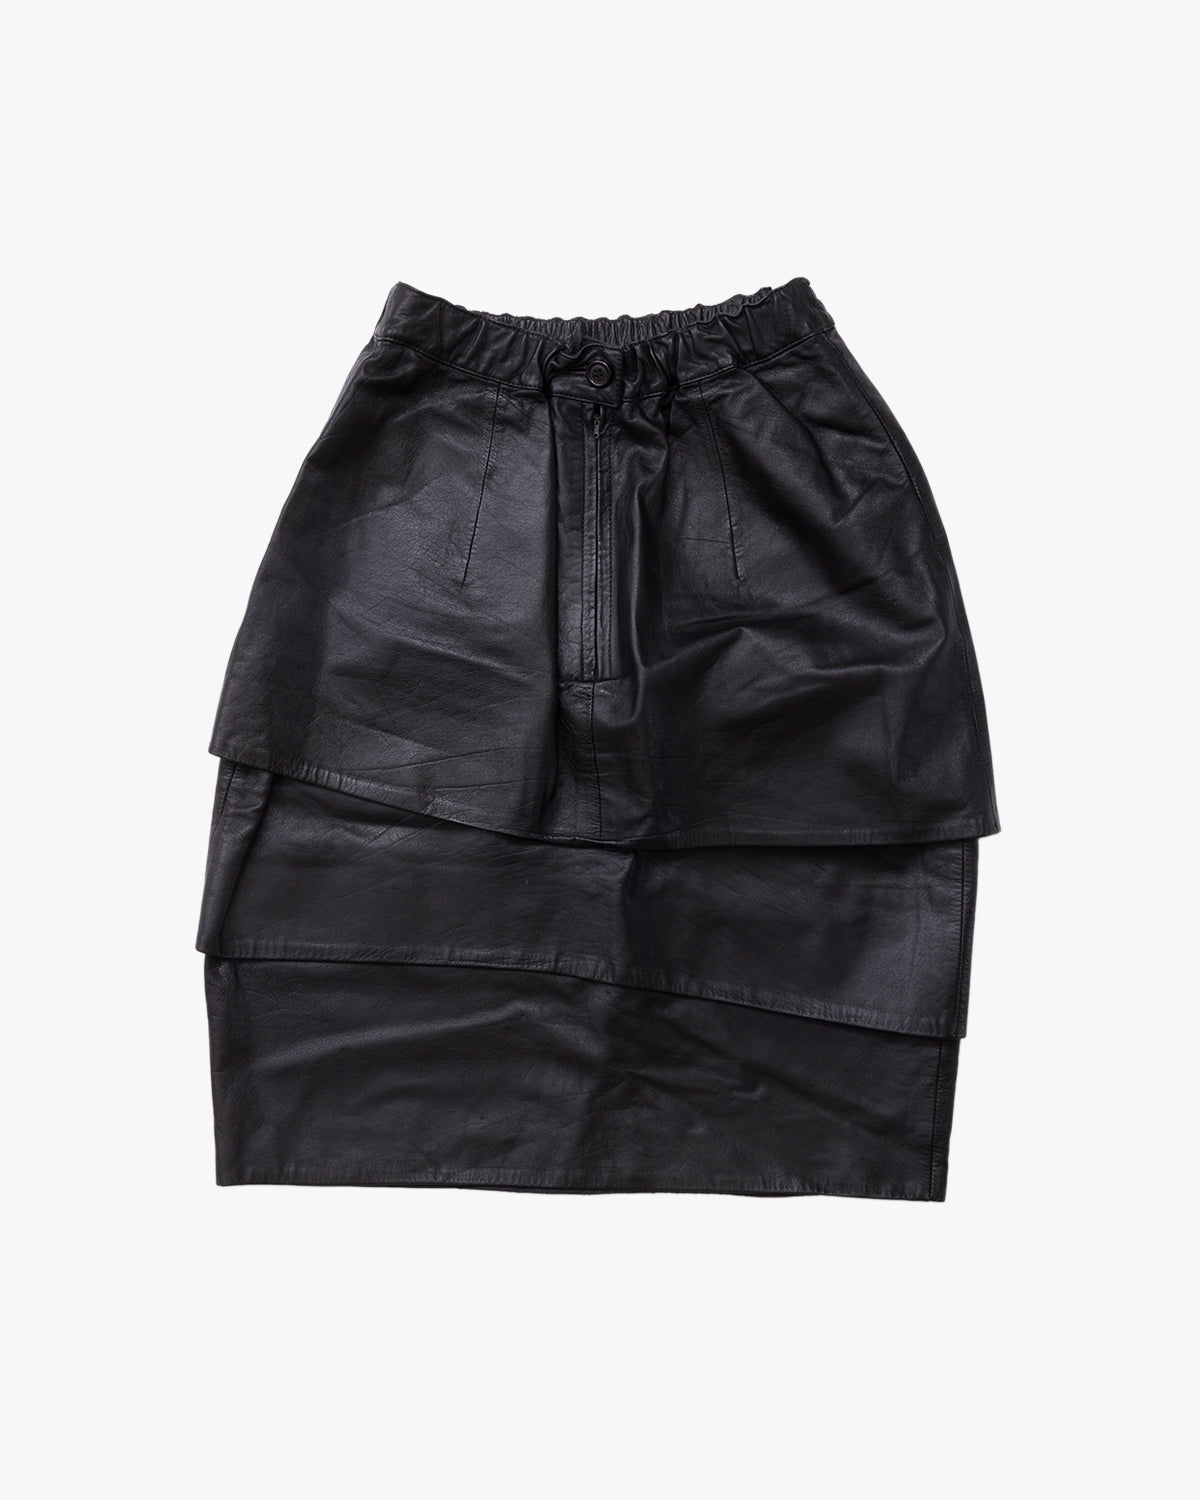 Leather Ruffle Skirt #3 / Black